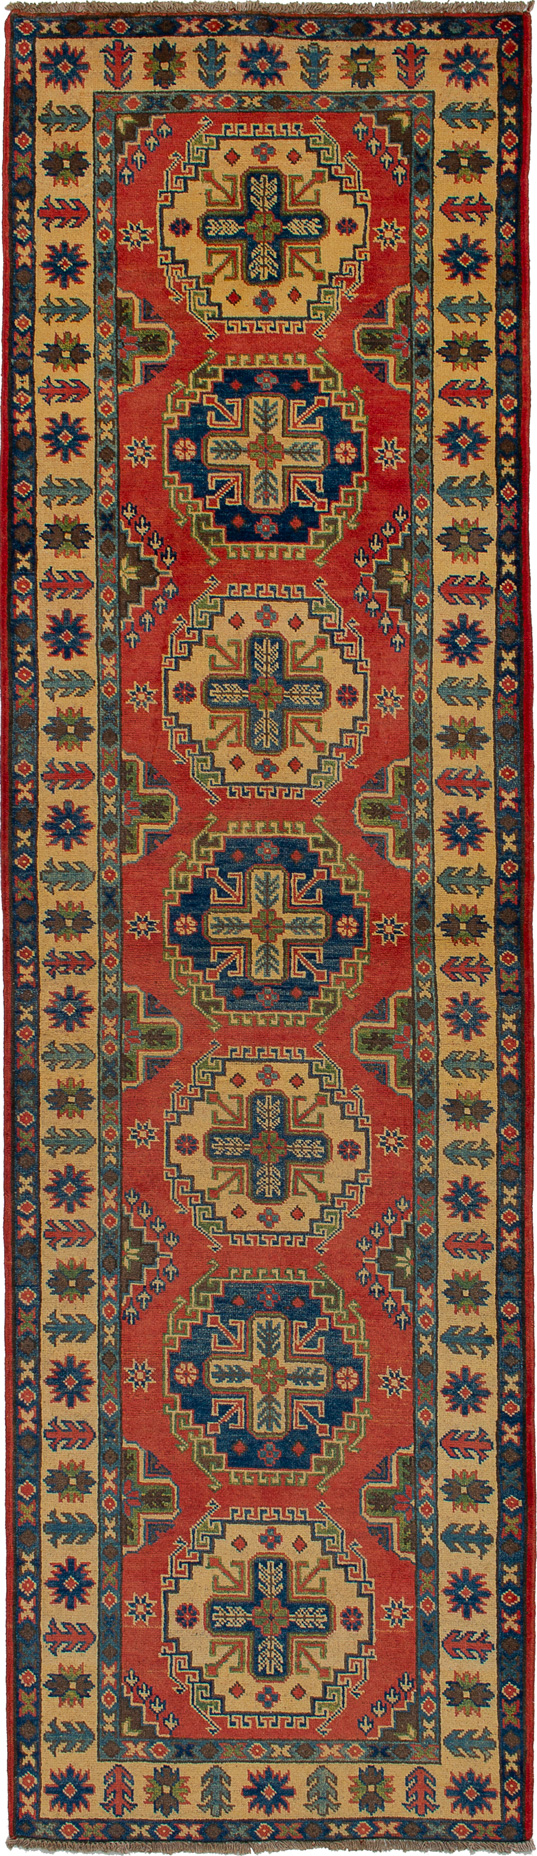 Hand-knotted Finest Gazni Dark Copper Wool Rug 2'8" x 9'8" Size: 2'8" x 9'8"  